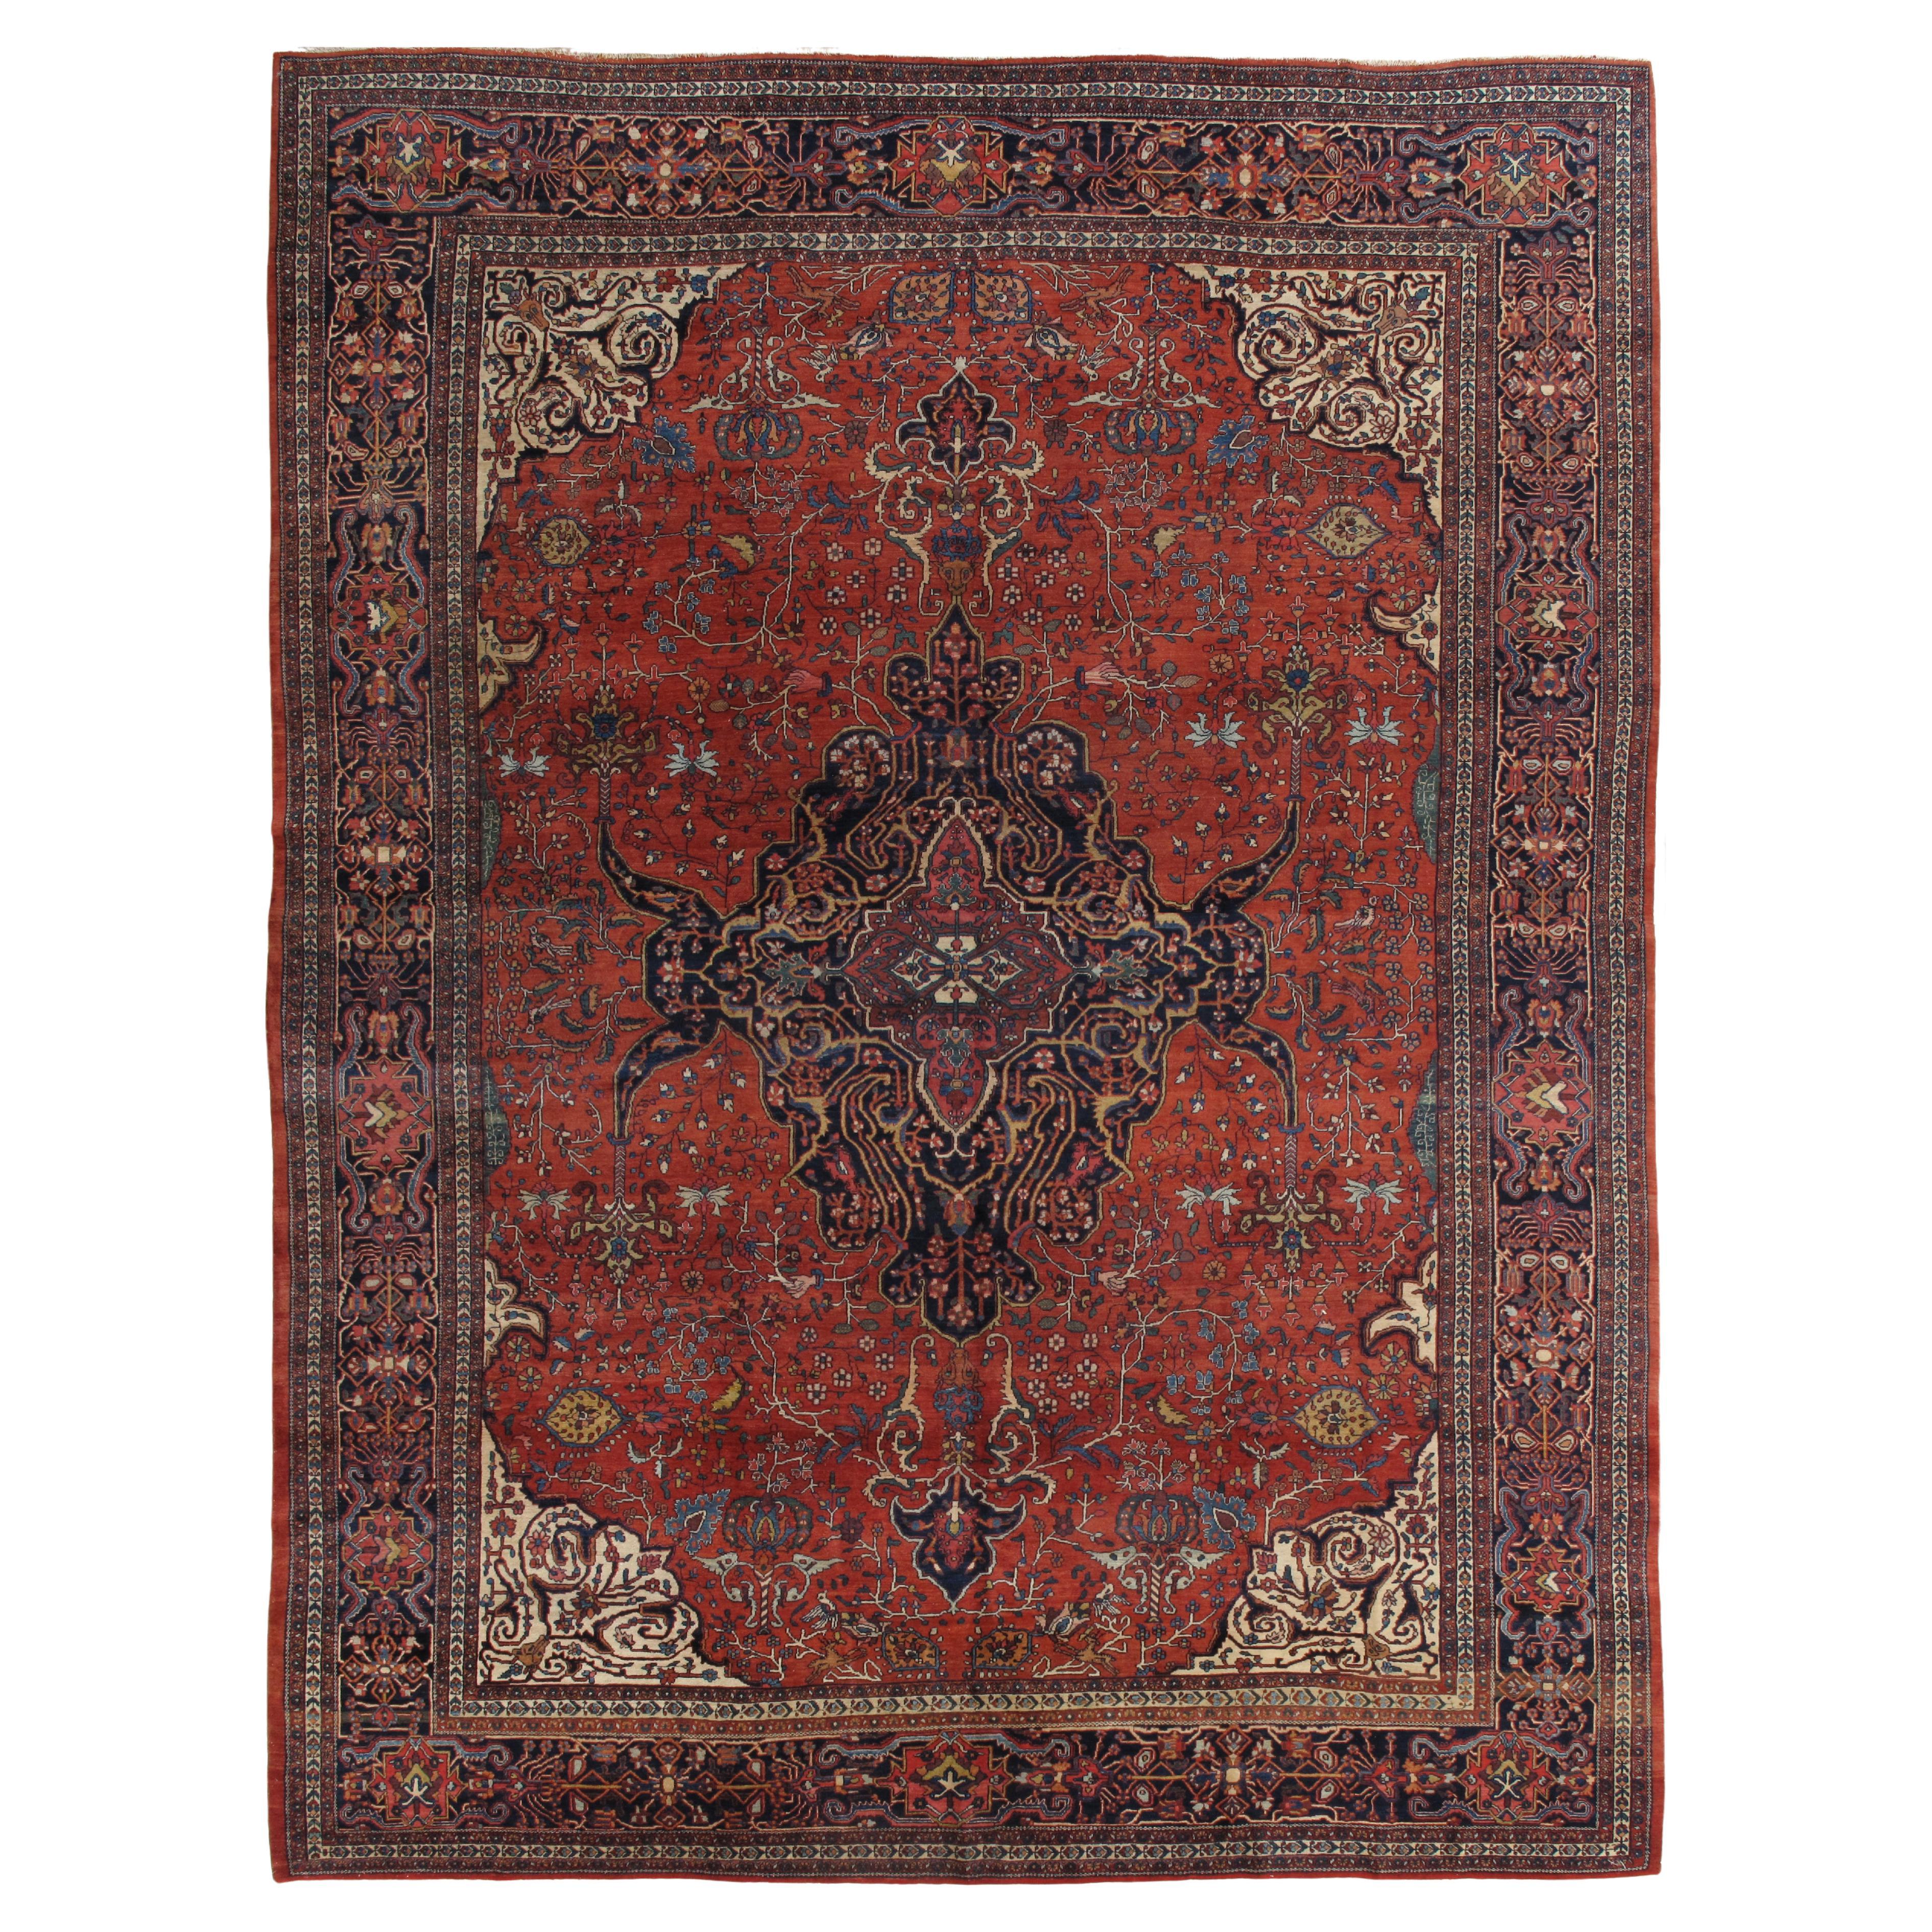 Antique Farahan Sarouk Carpet, Handmade Oriental Rug, Red, Navy, Fine Details